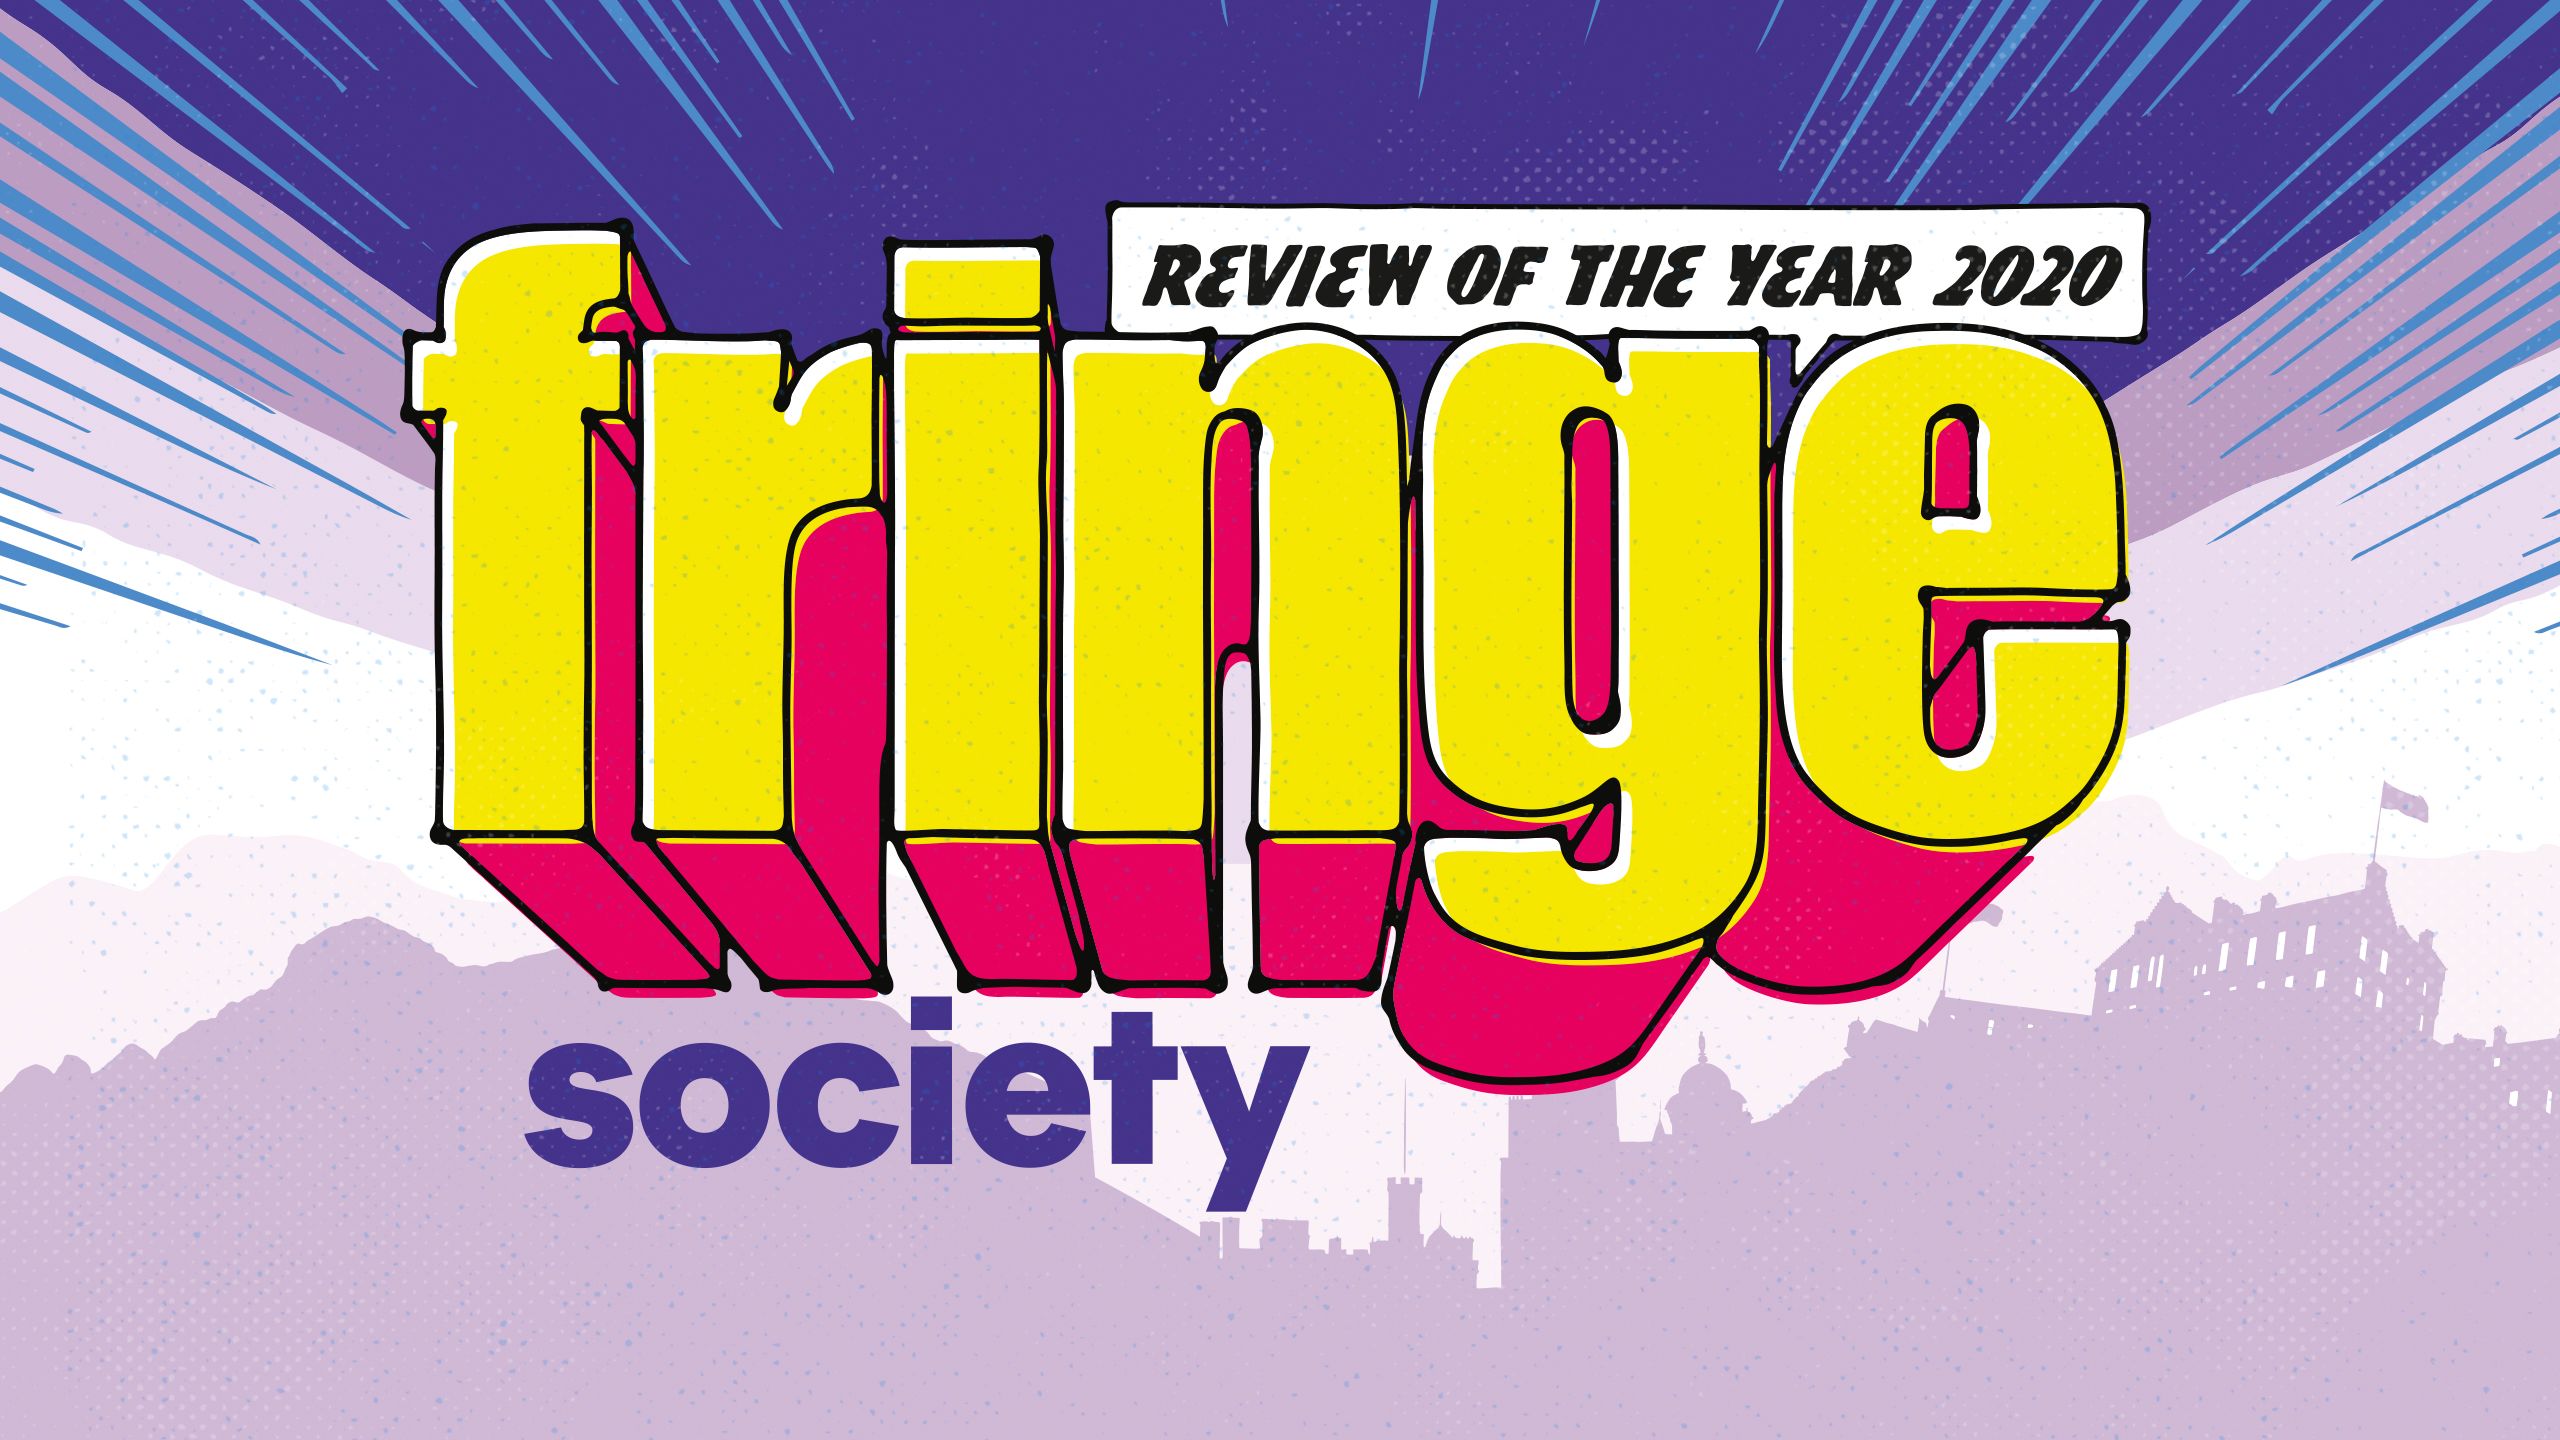 Edinburgh Festival Fringe Society Review of the year 2020 